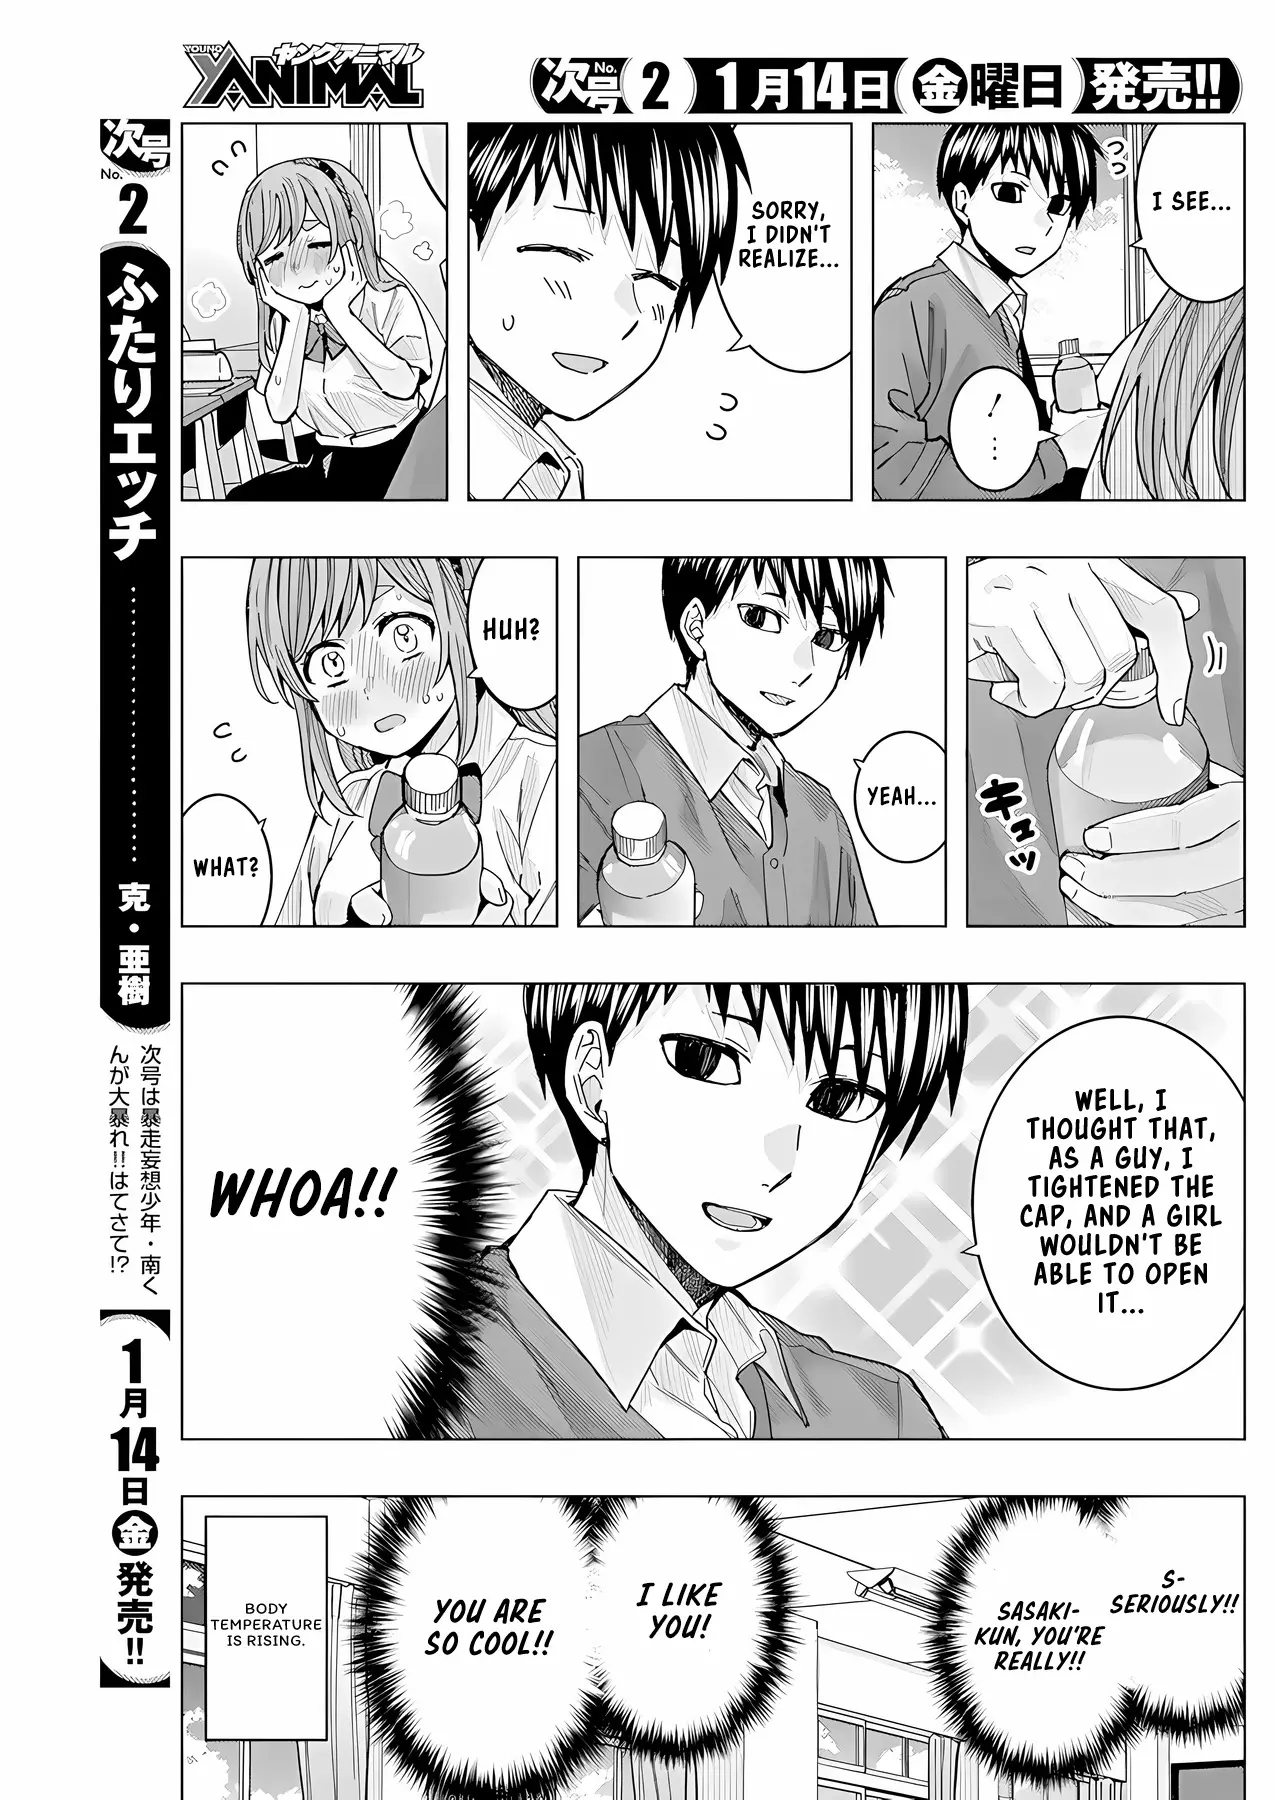 "nobukuni-San" Does She Like Me? - 26 page 10-1e11cd90